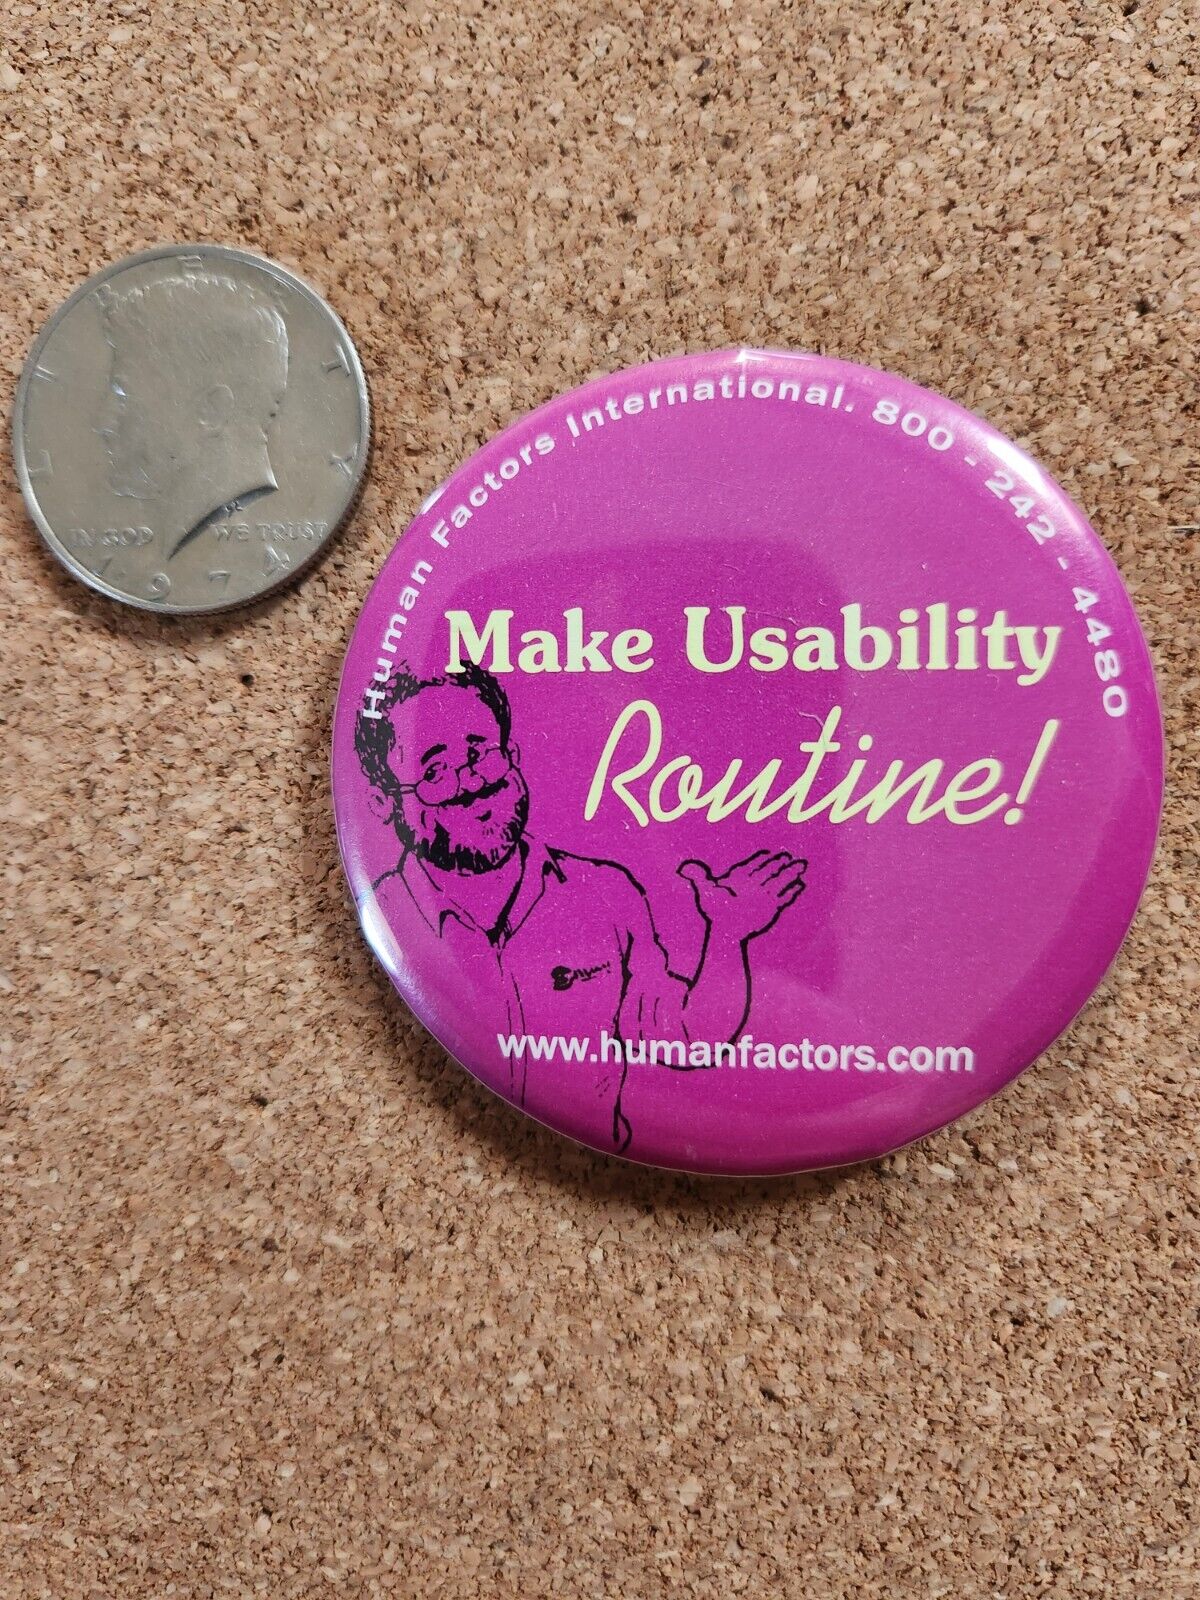 Vintage Make Usability Routine Human Factors.com pinback button 